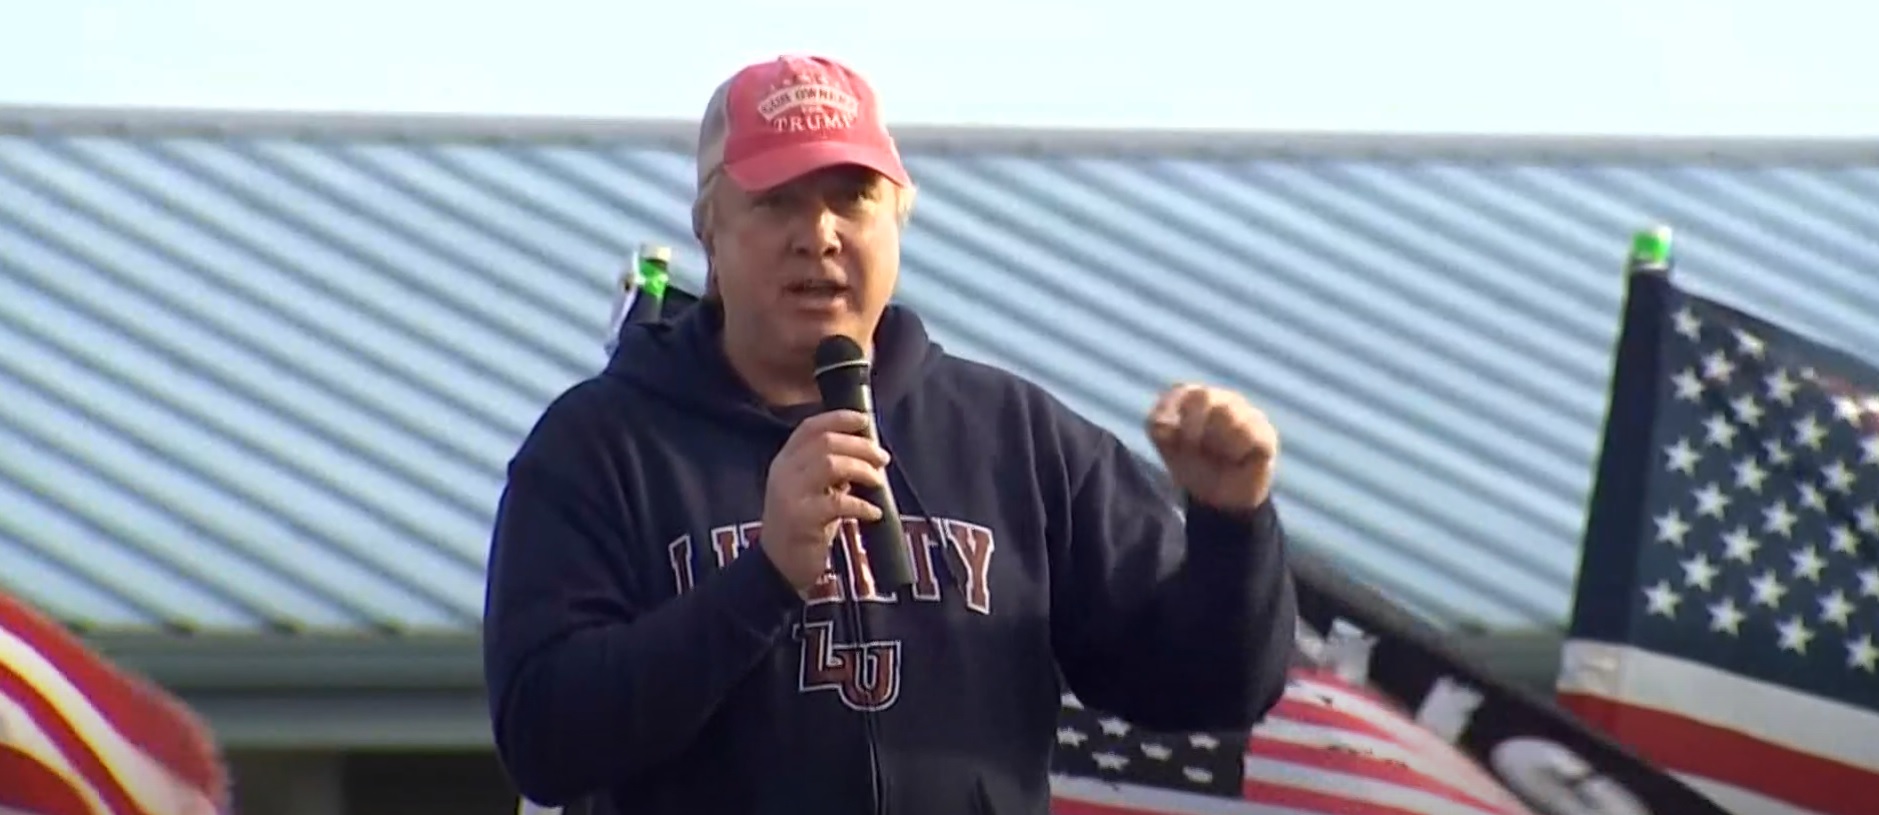 VIDEO: Sen. Ericksen at rally on shutdown frustrations